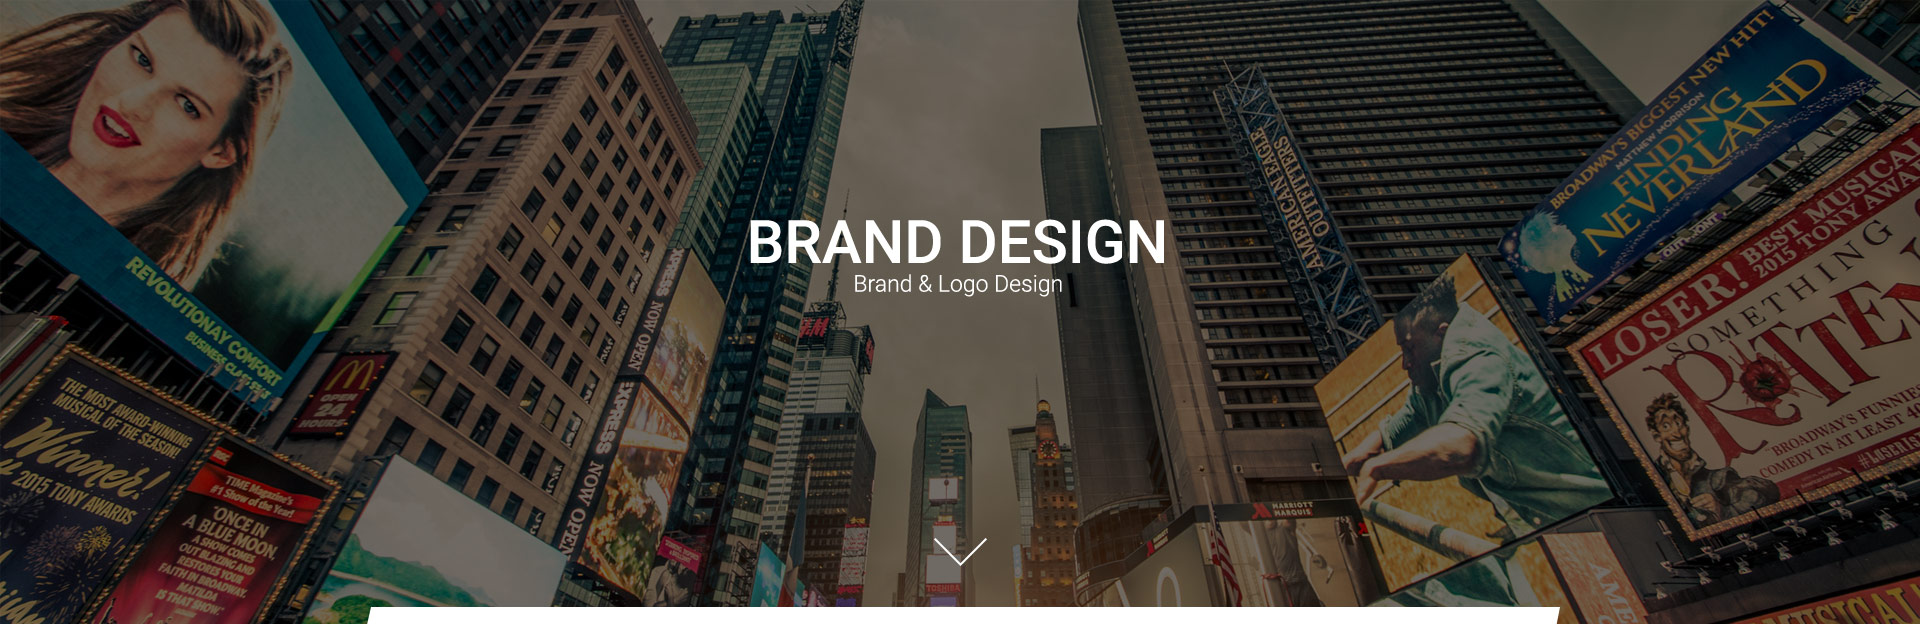 City Background for Brand Design Header